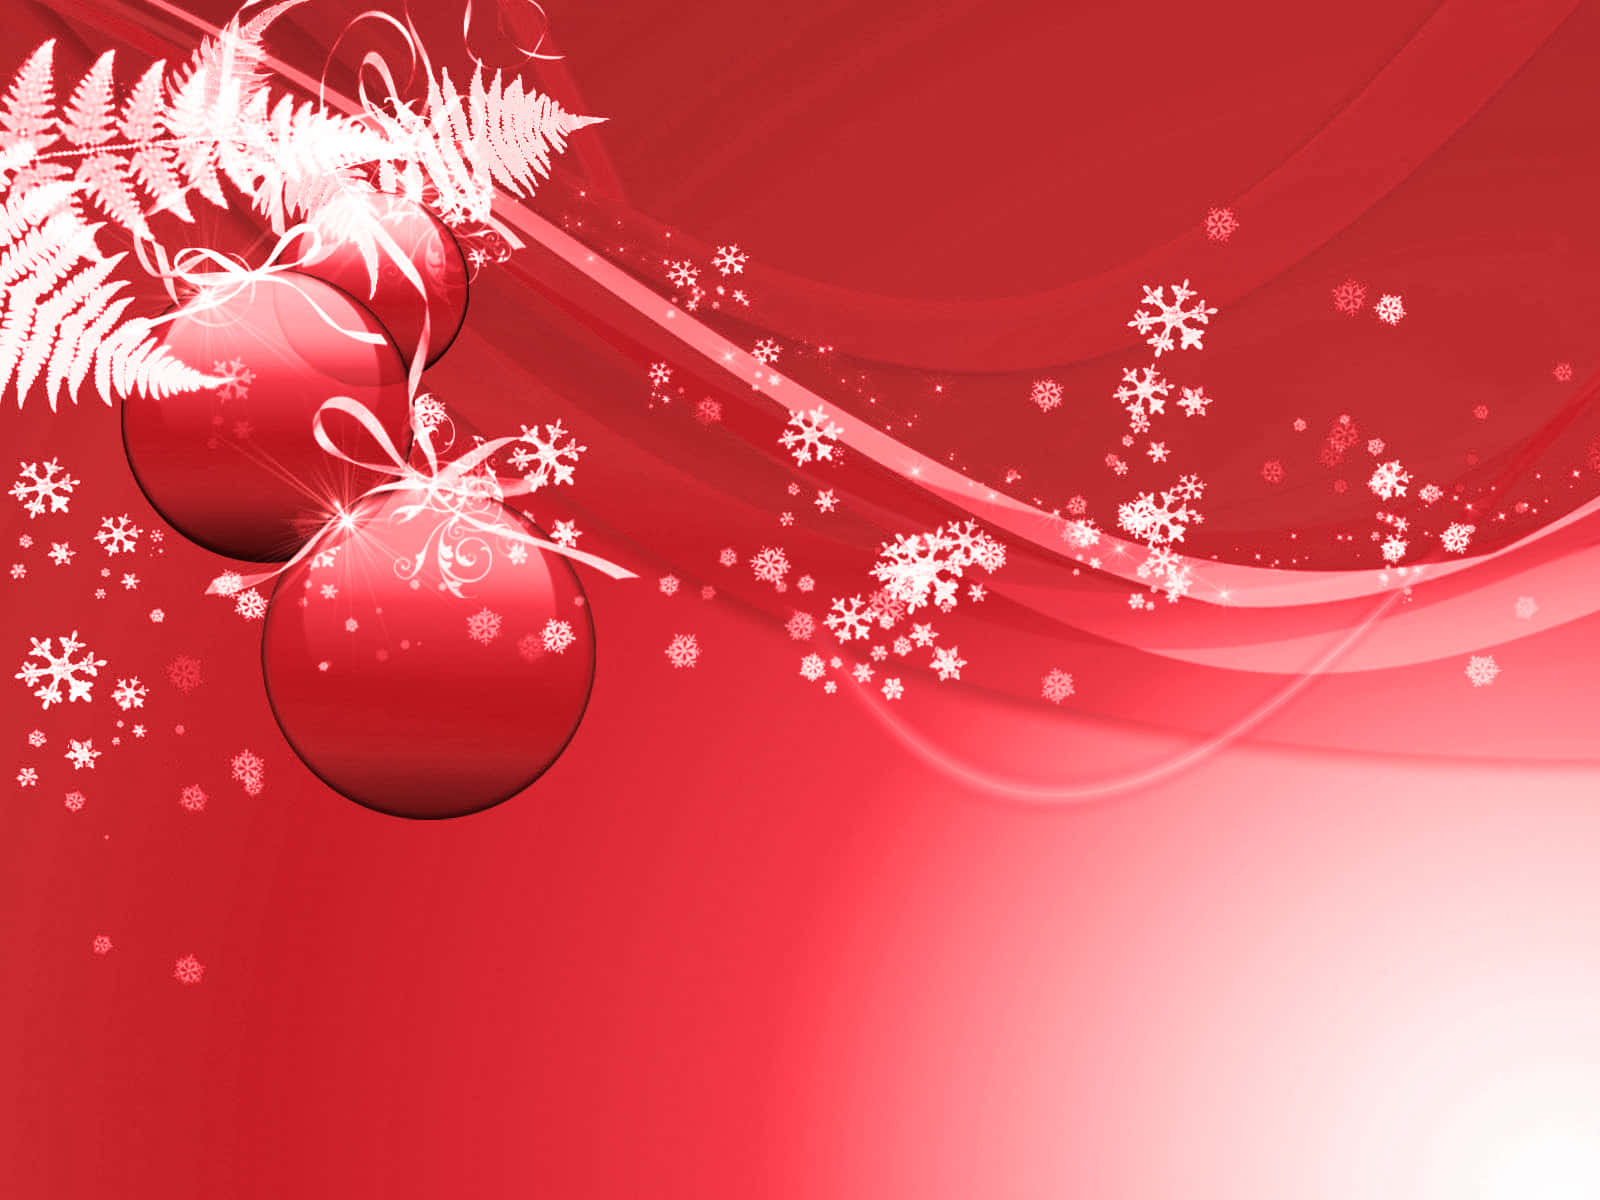 Enjoy a Festive Red Aesthetic Christmas Wallpaper